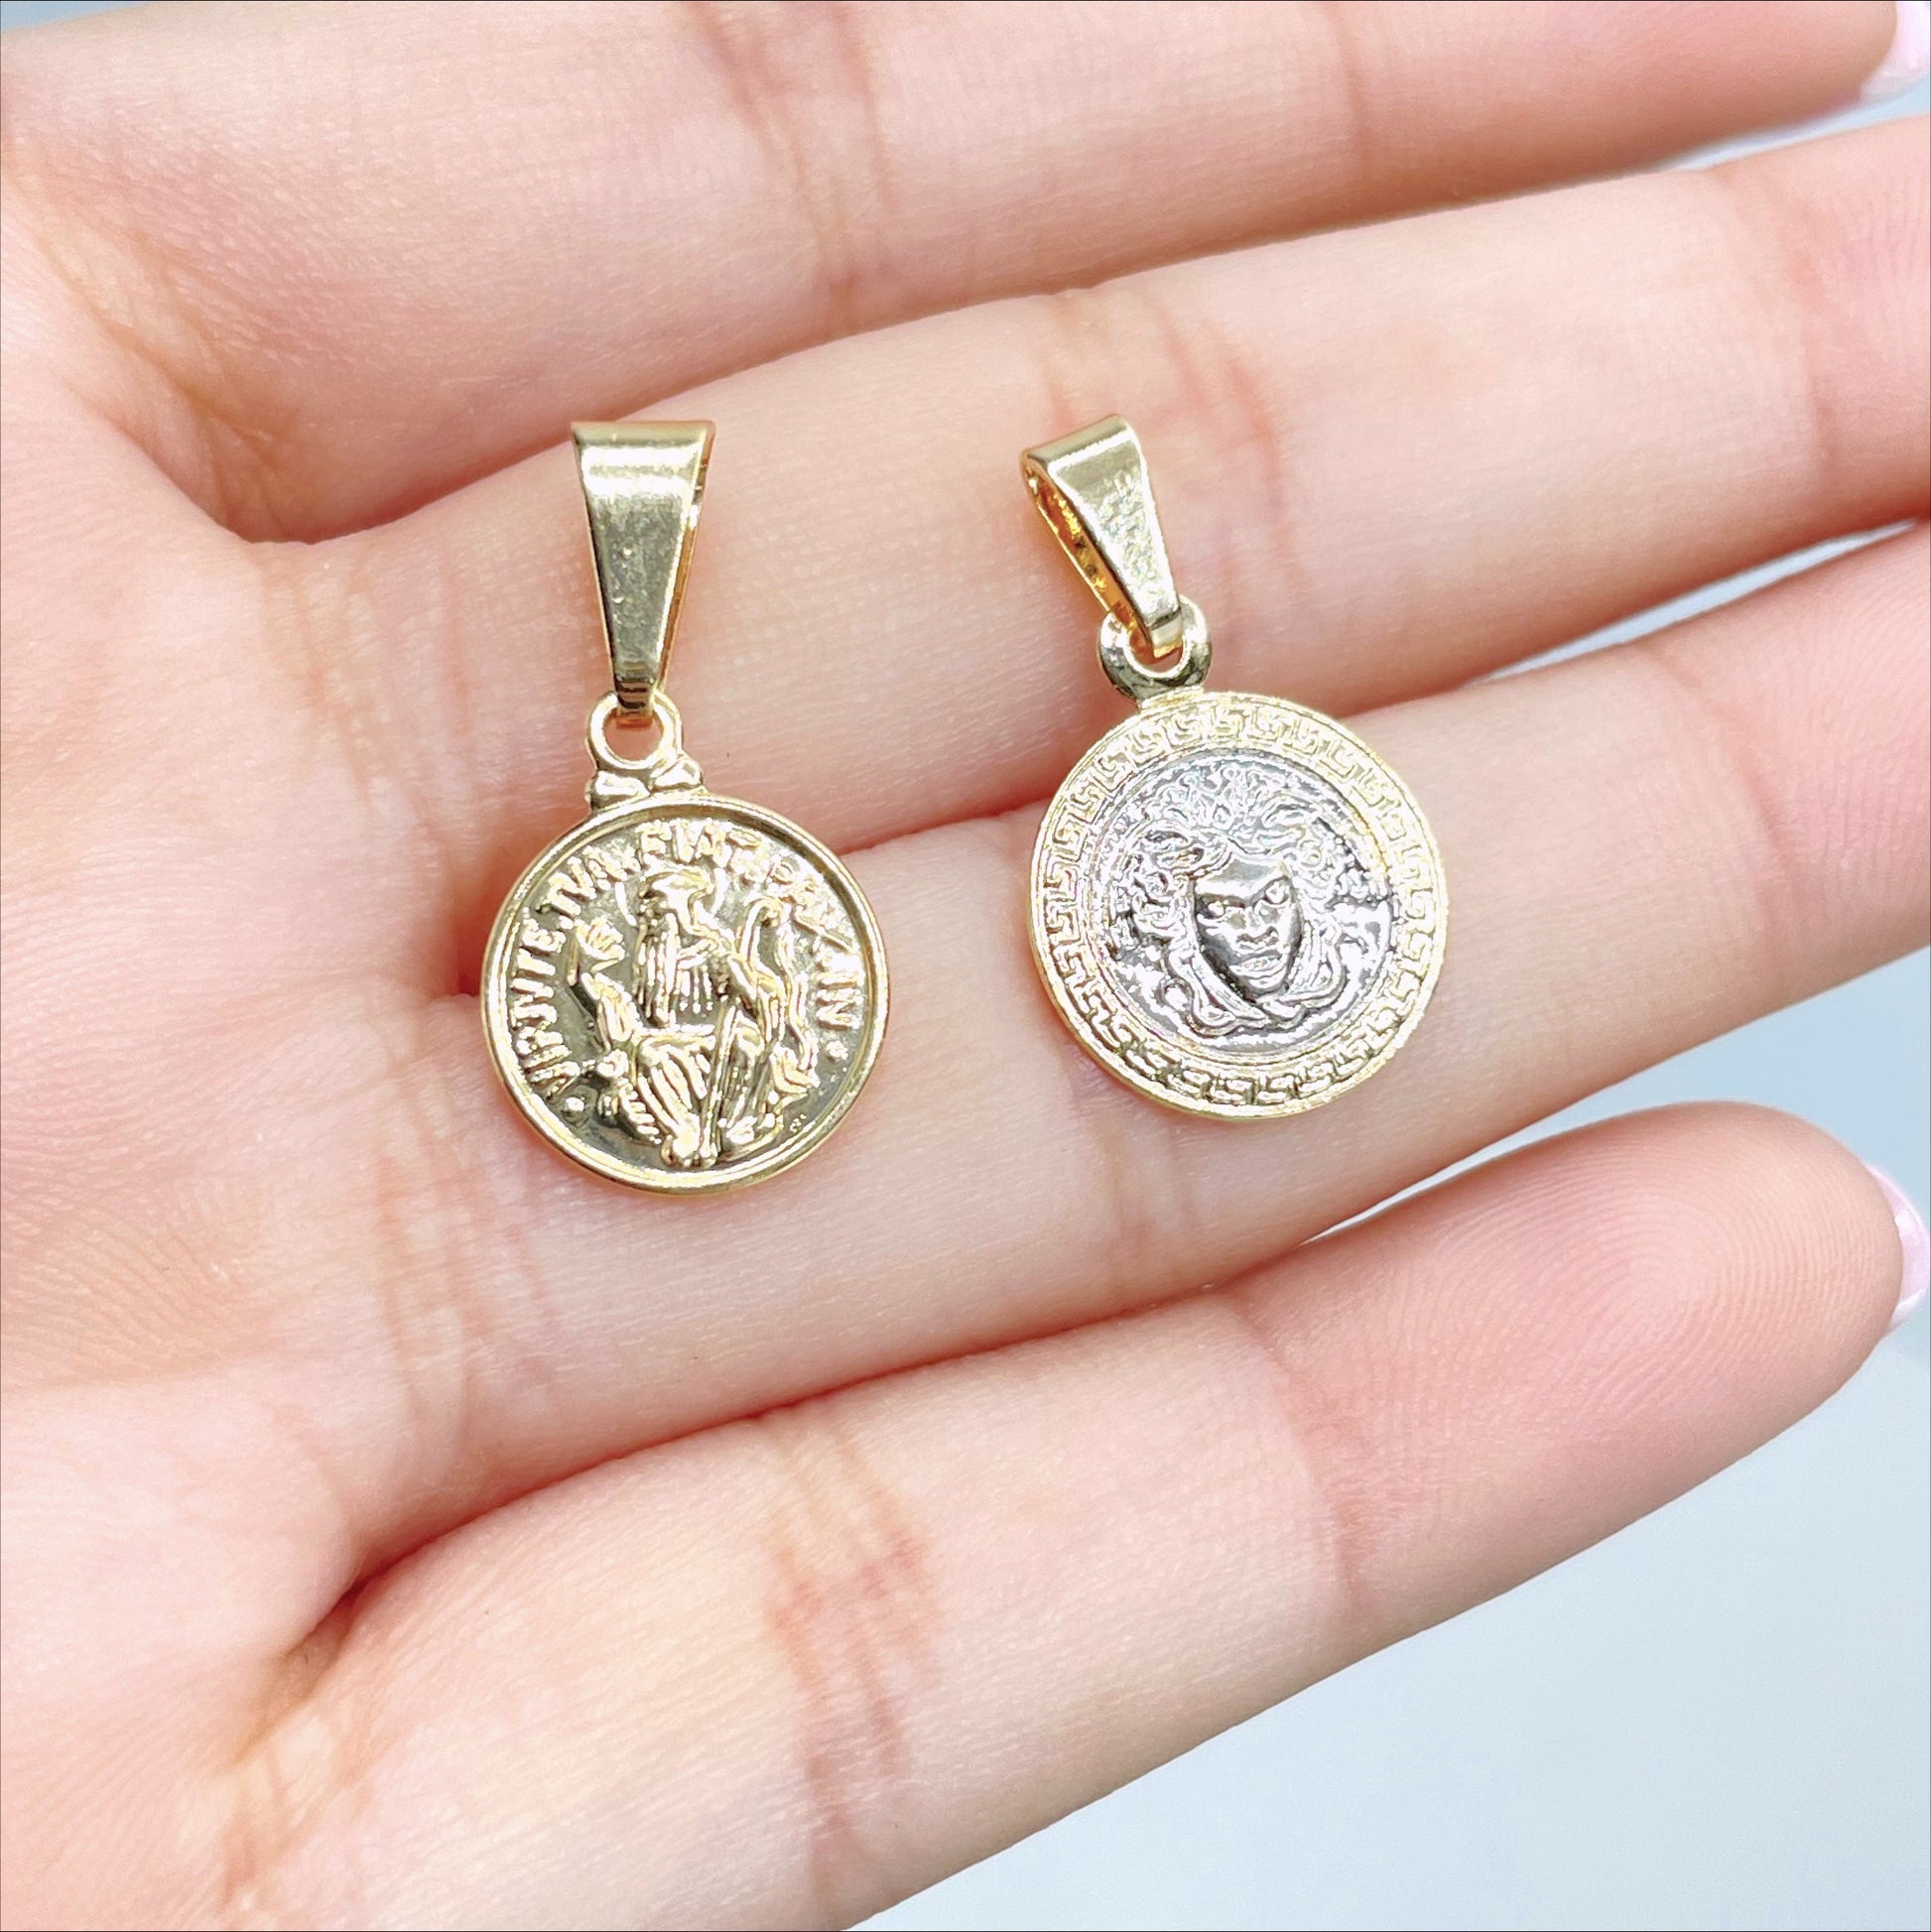 18k Gold Filled Medusa Greek Mythology Medal Charm or Amulet "Virtute Tva Fiat Pax in" Medal Charm, Wholesale Jewelry Making Supplies